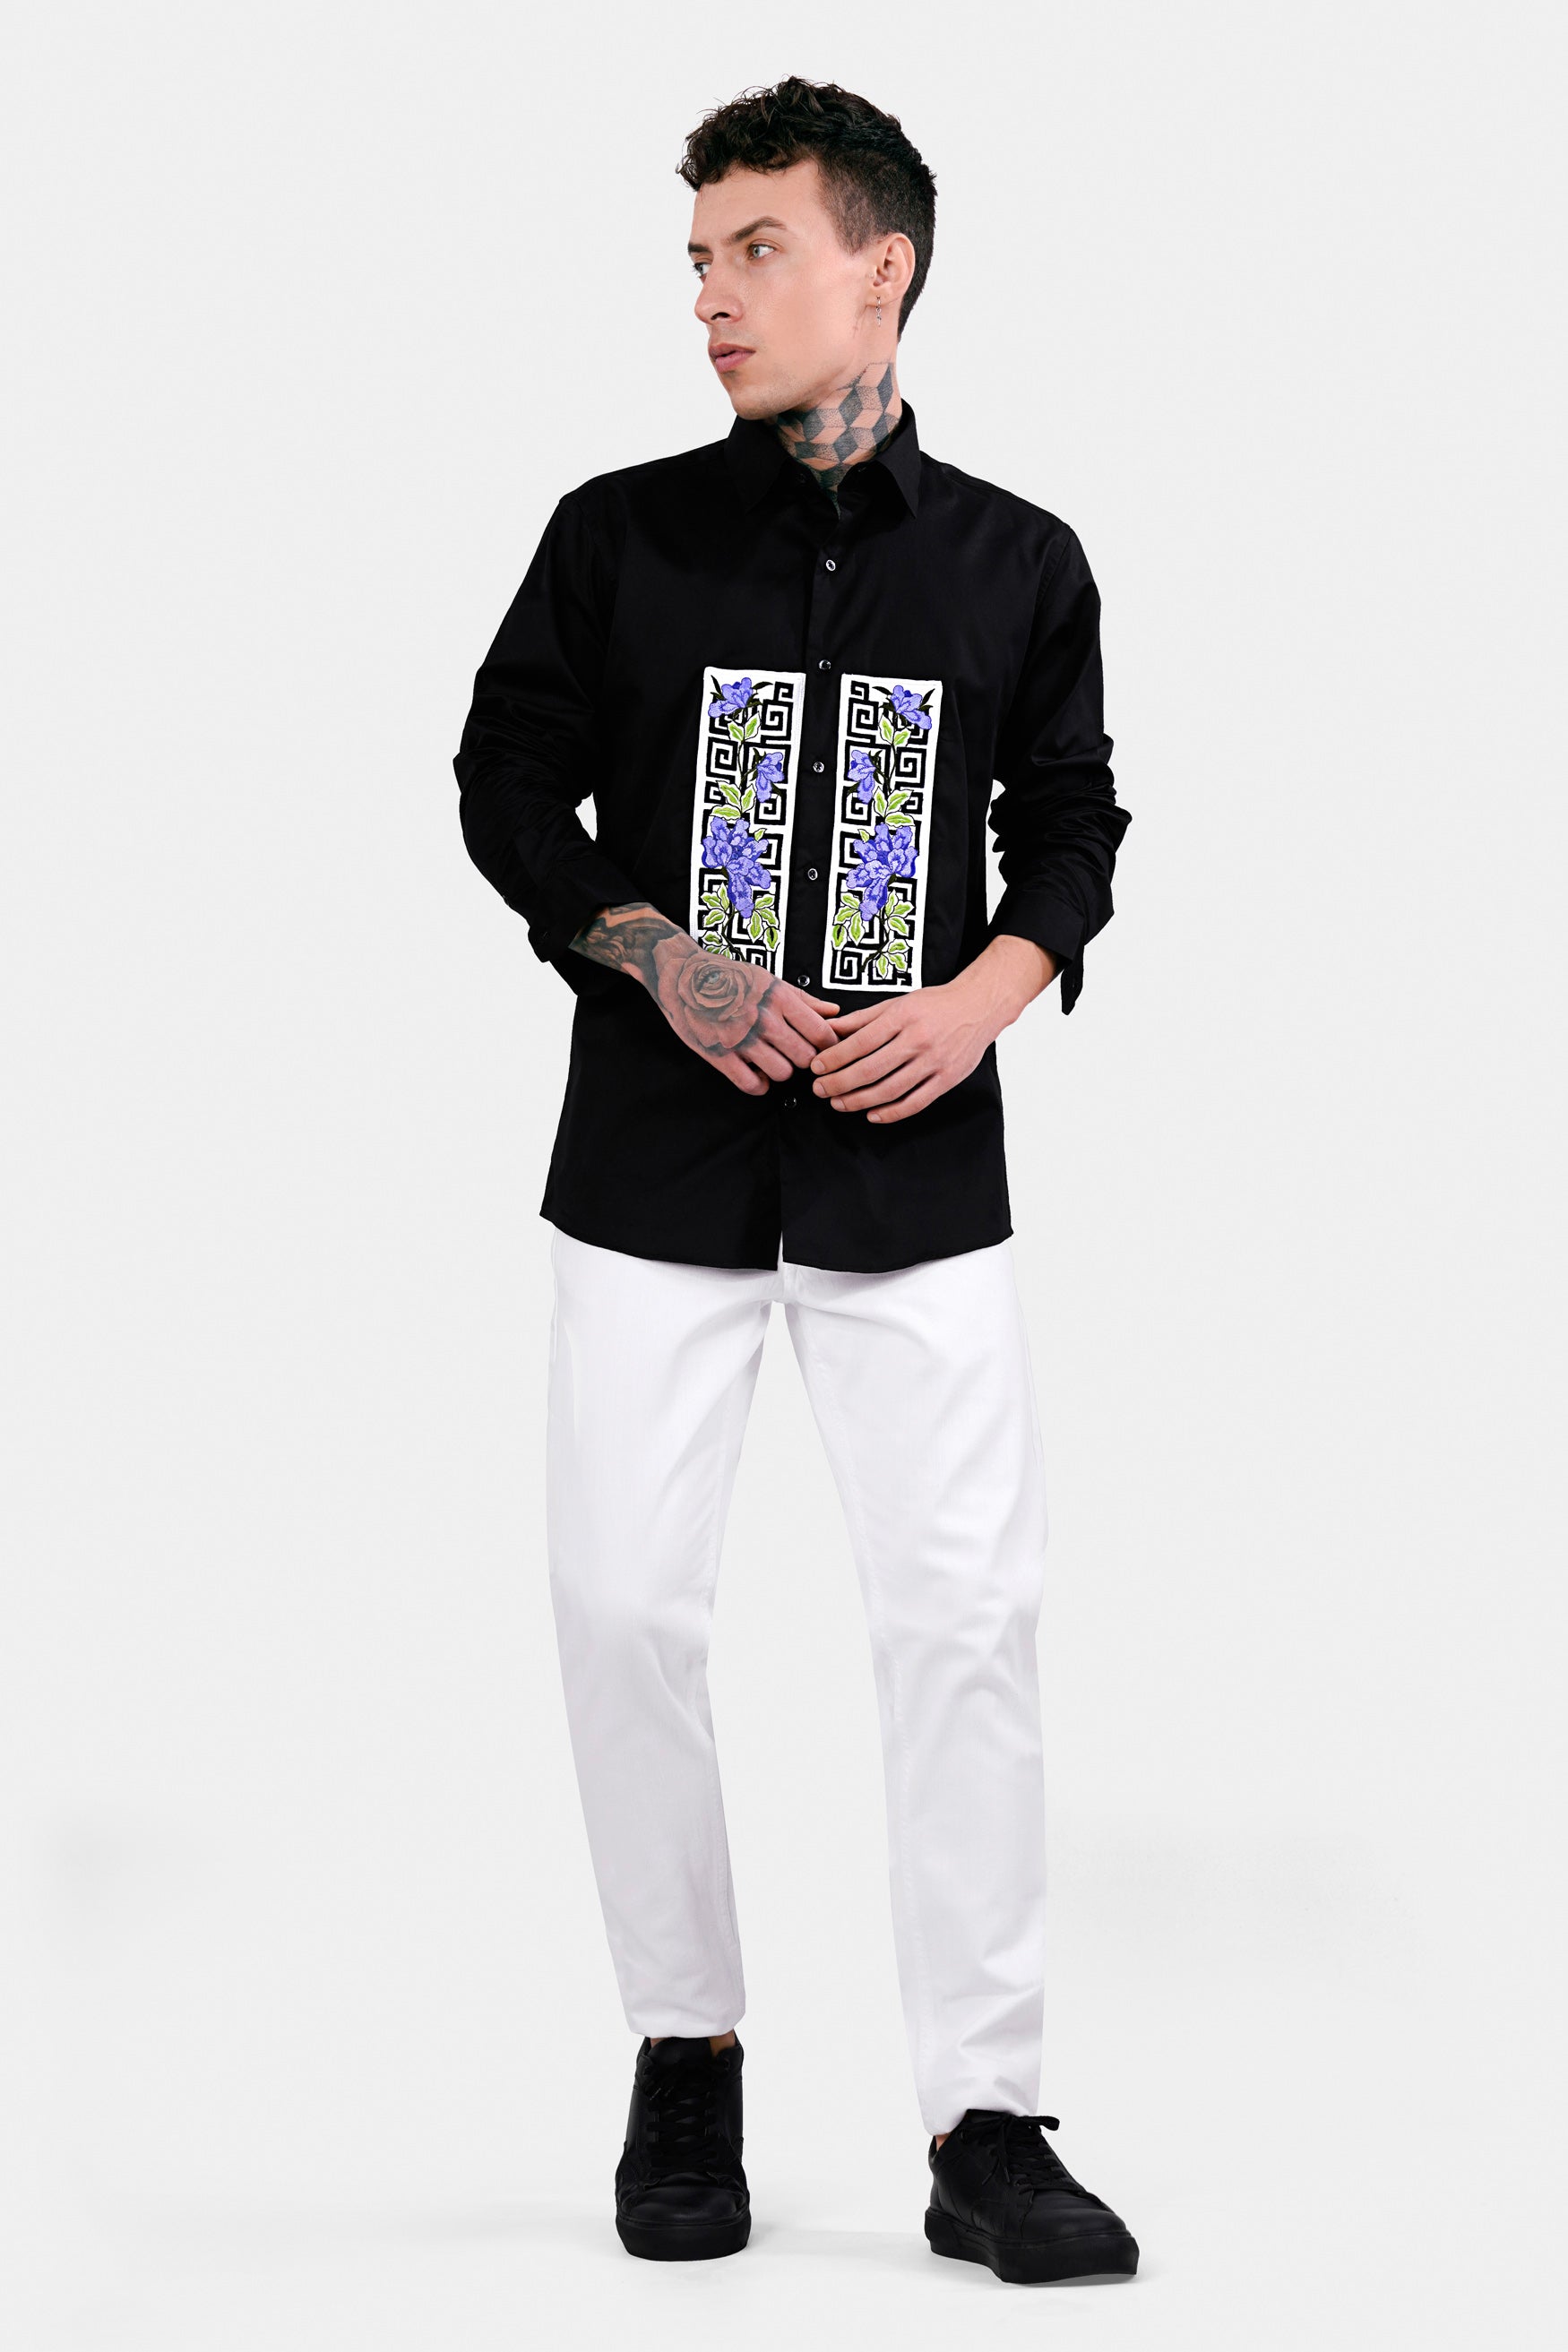 Jade Black Patchwork Subtle Sheen Super Soft Premium Cotton Designer Shirt